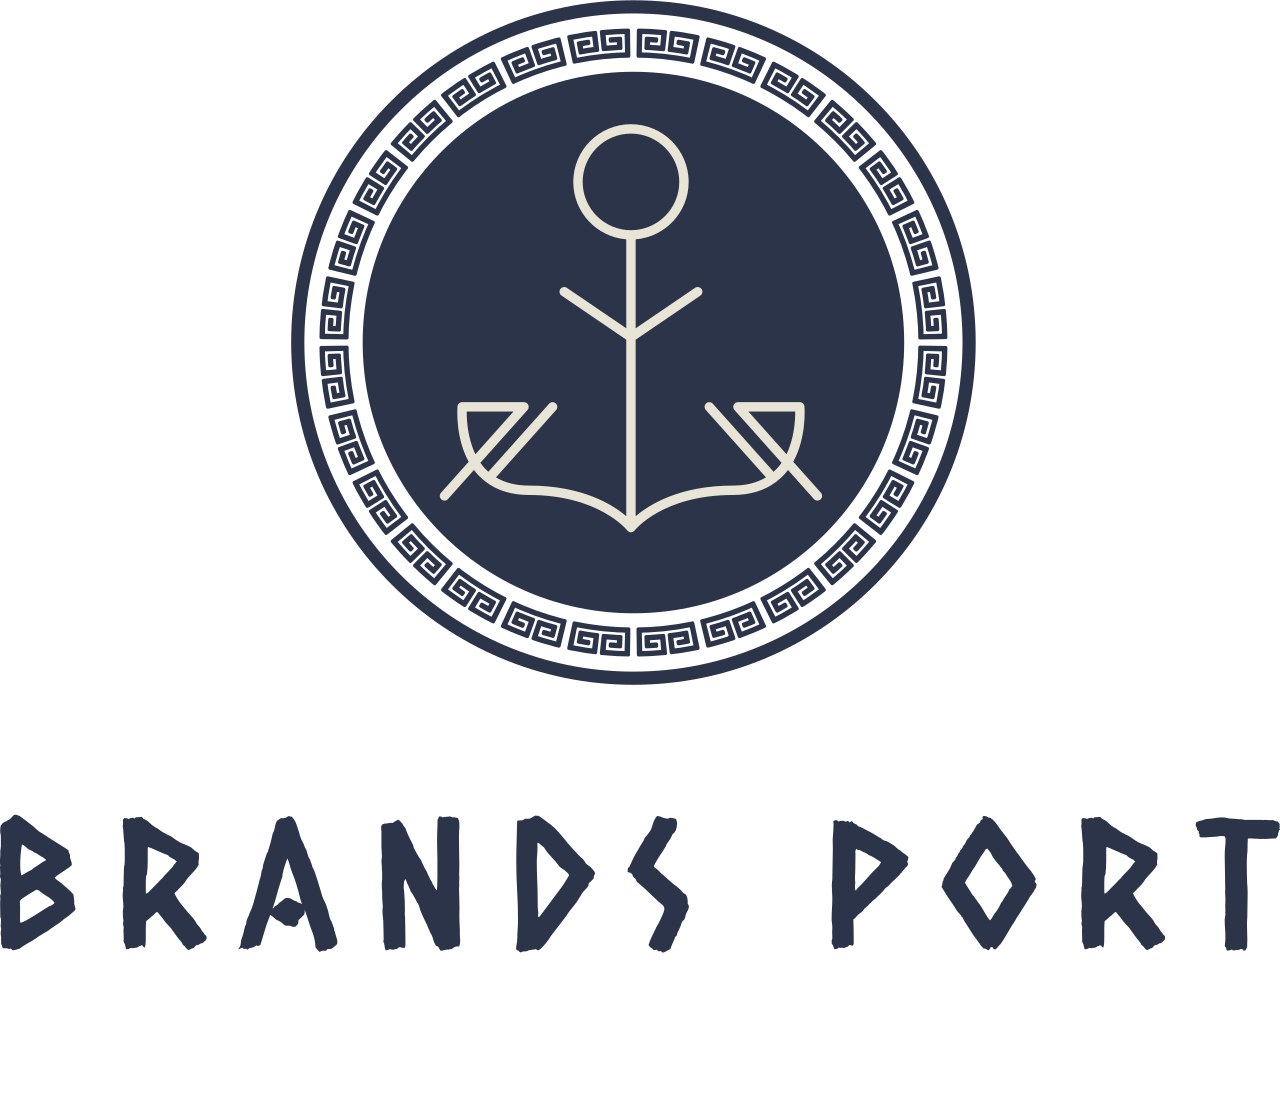 Brands Port's web page